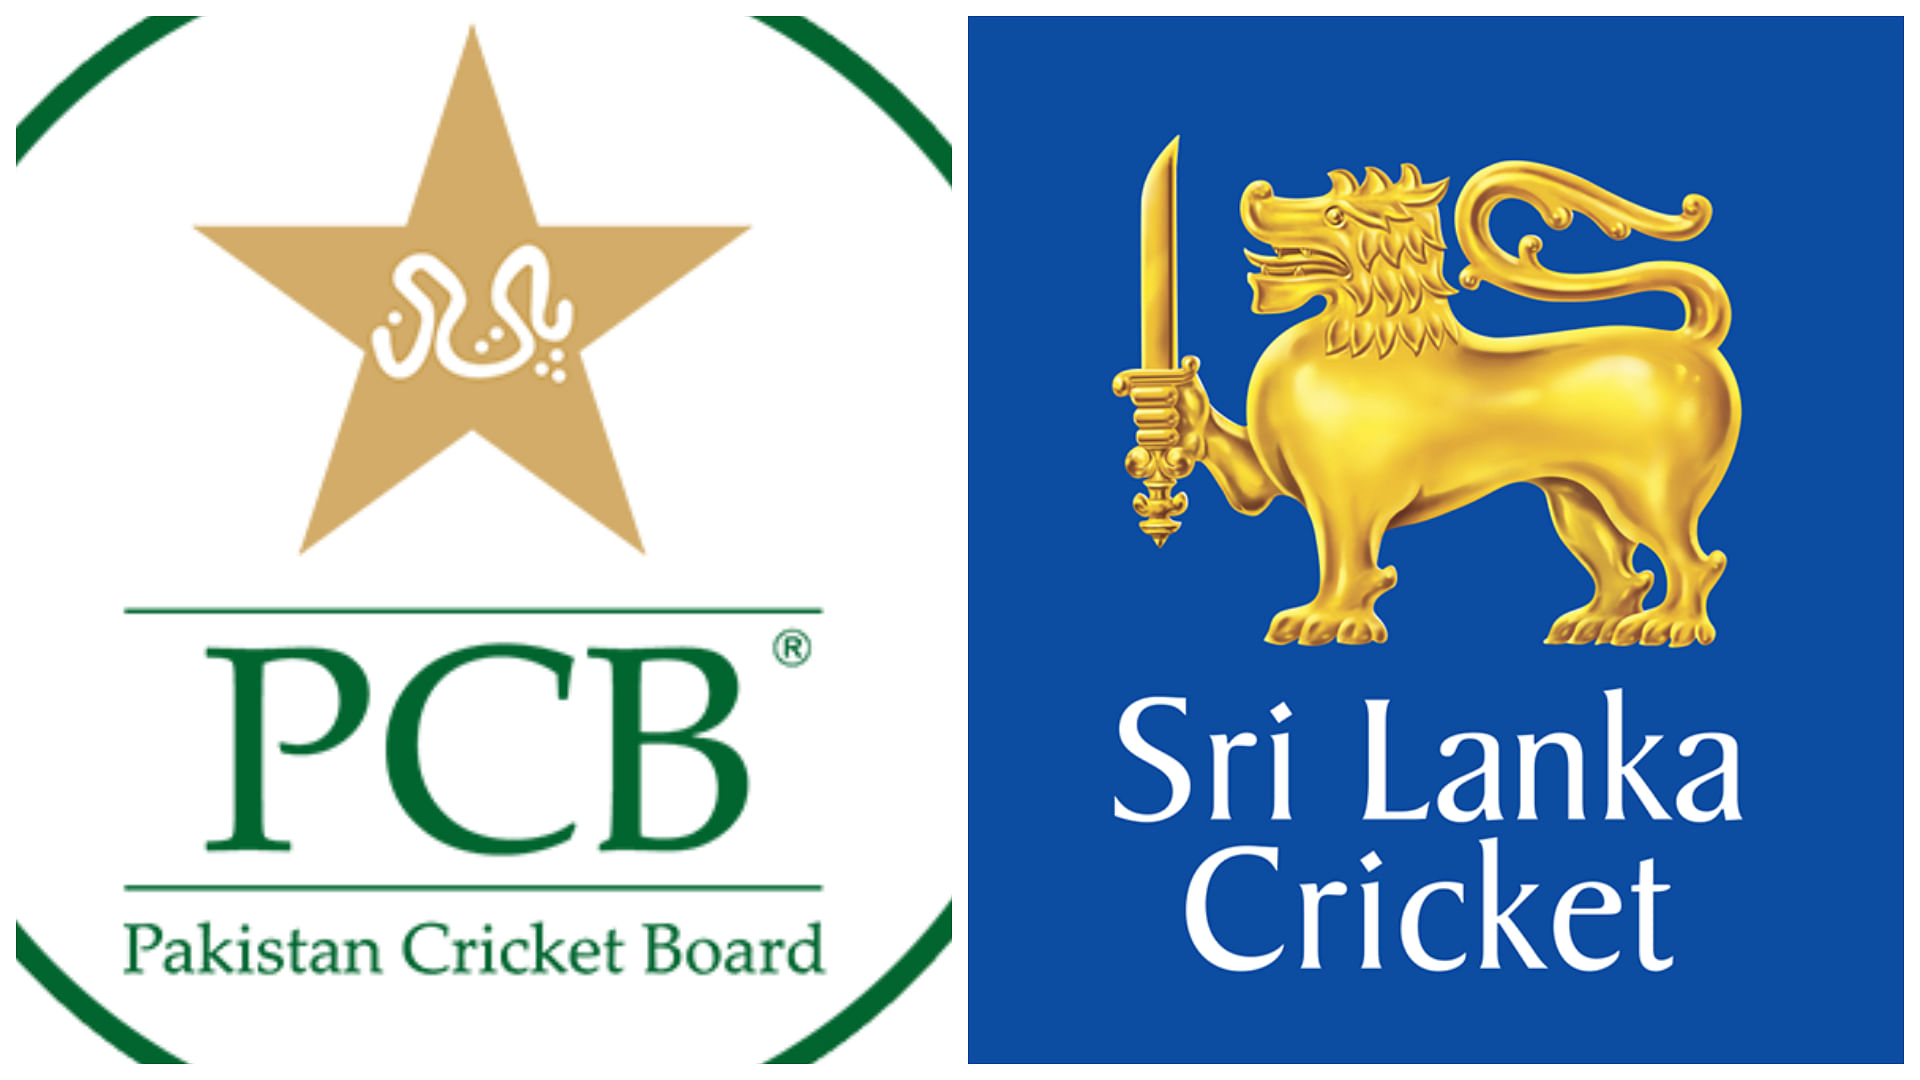 Bangladesh V Sri Lanka Cricket - Bangladesh Vs Australia 2017 Transparent  PNG - 1021x550 - Free Download on NicePNG